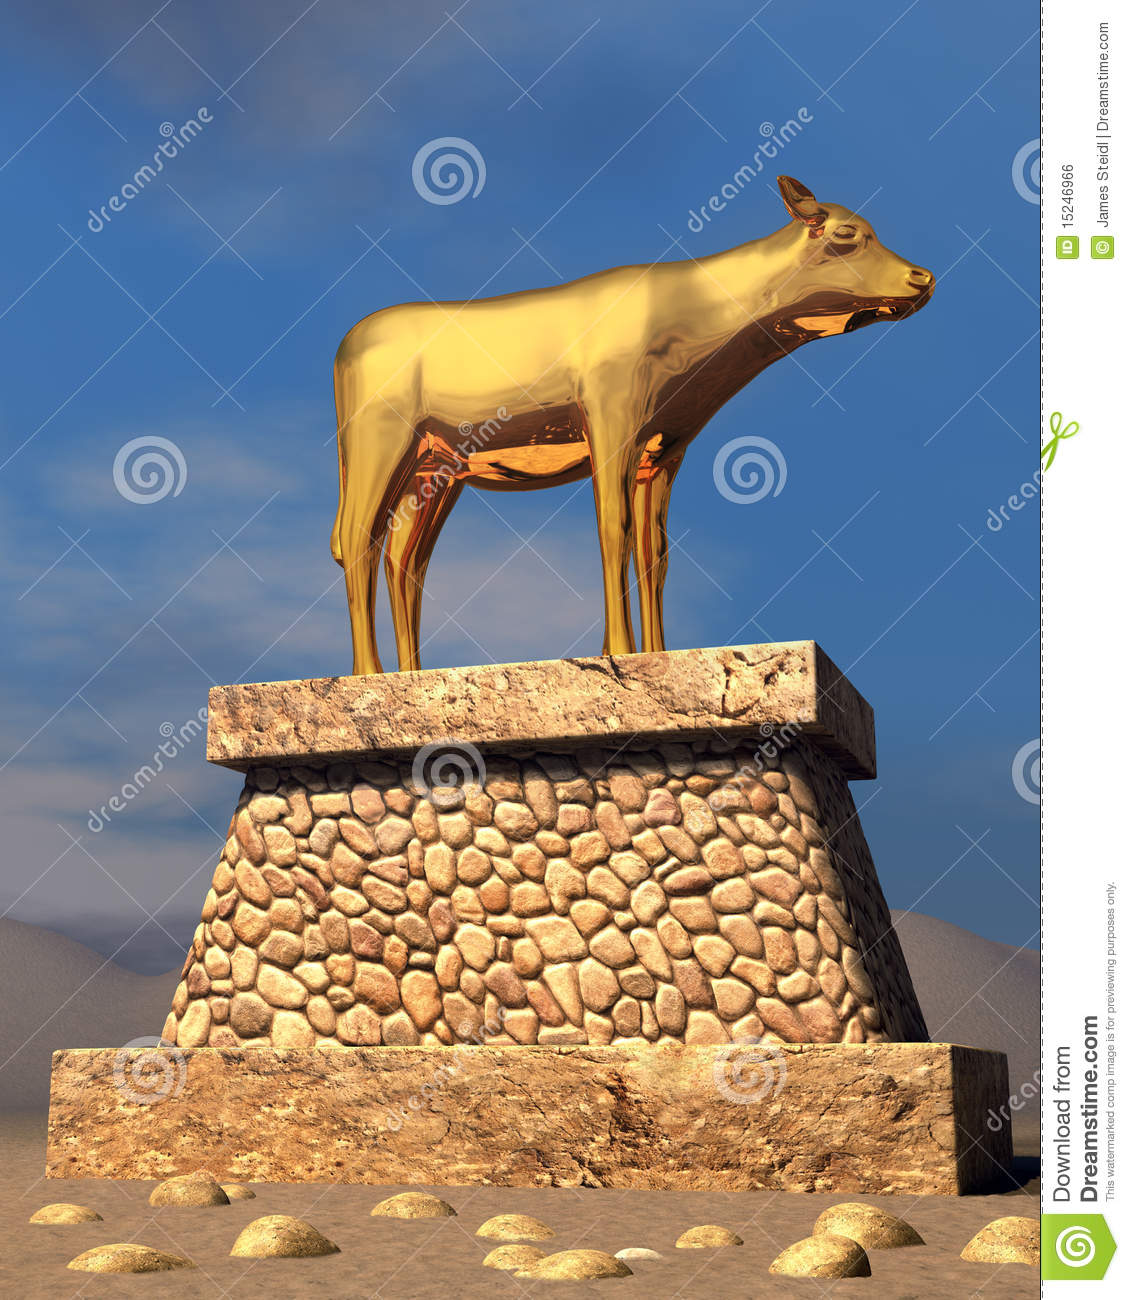 Golden Calf Royalty Free Stock Image   Image  15246966